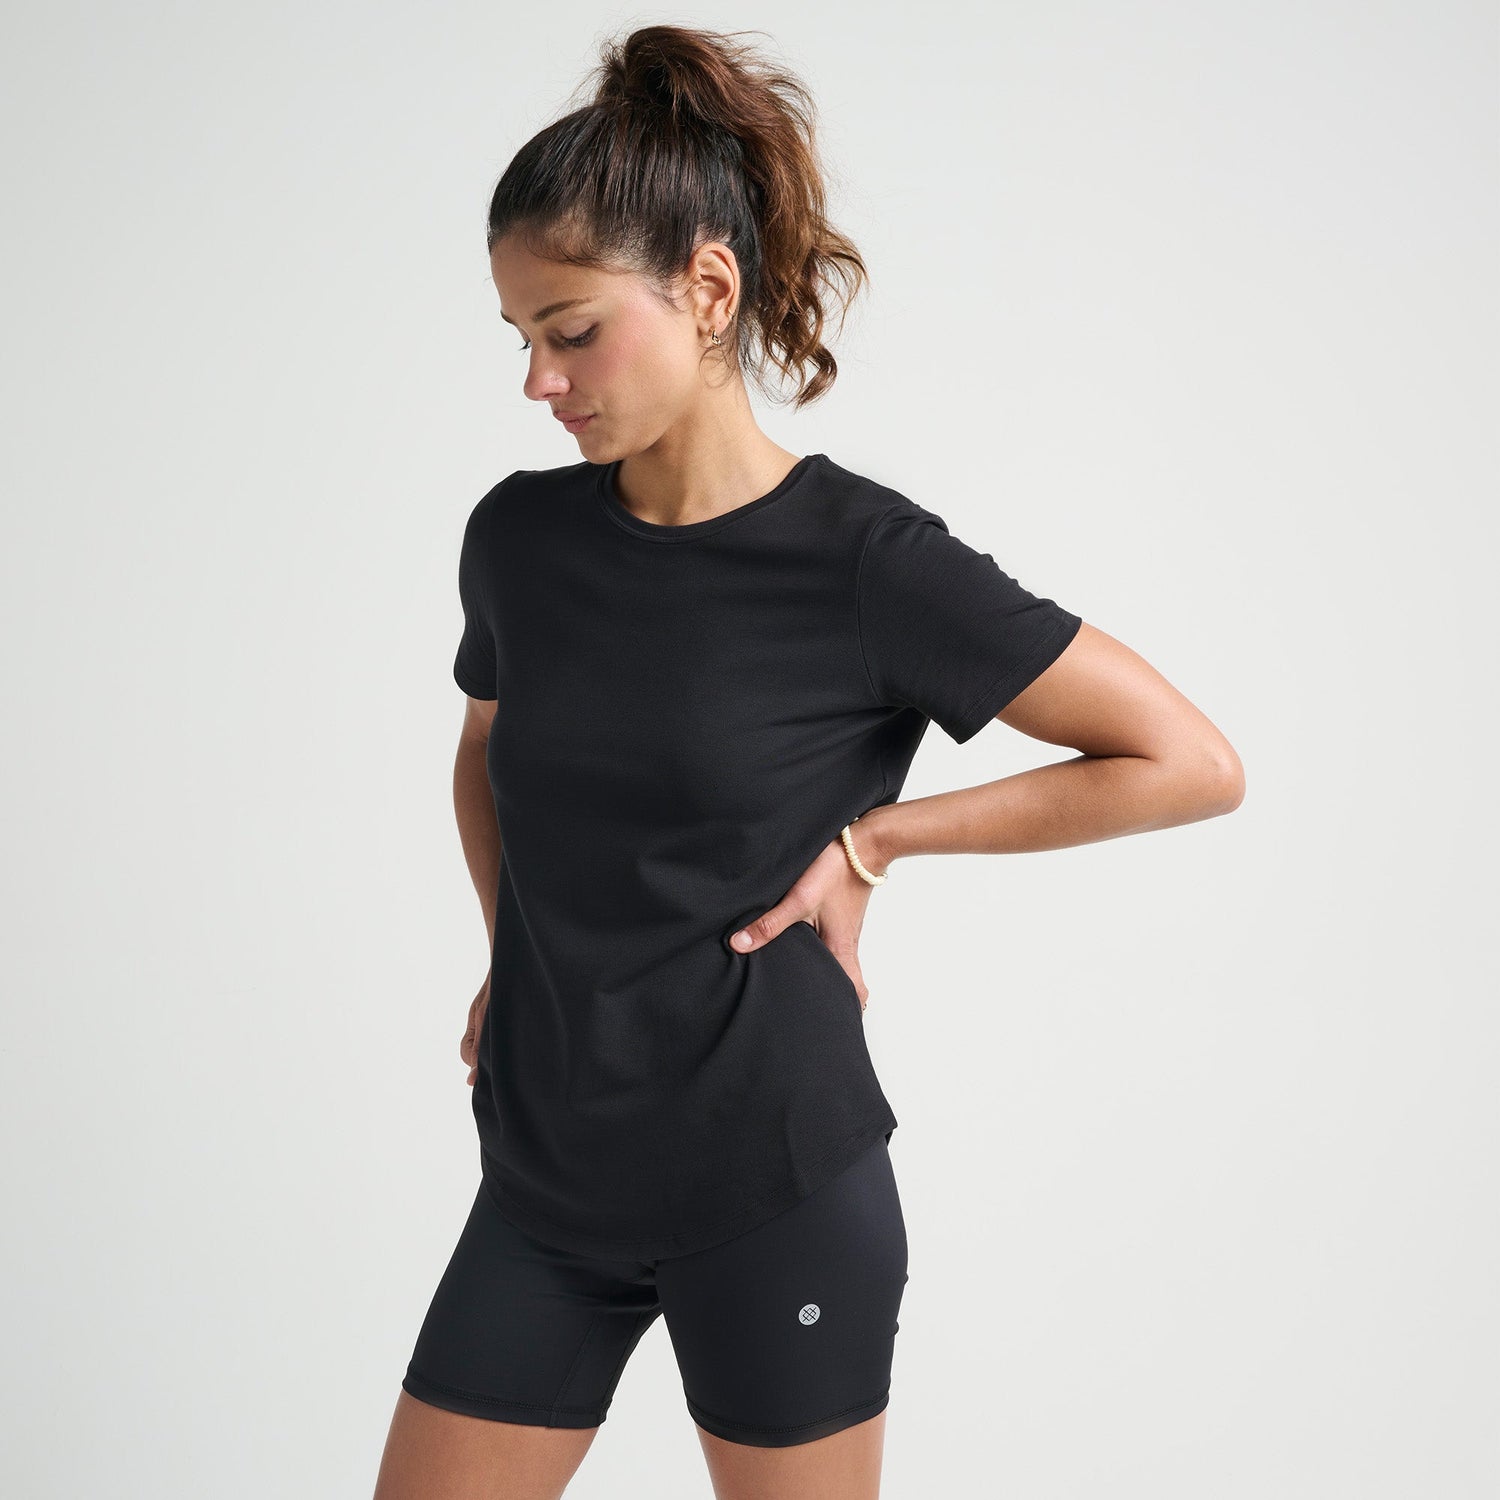 Stance Women's Get Set Performance T-Shirt Black |model